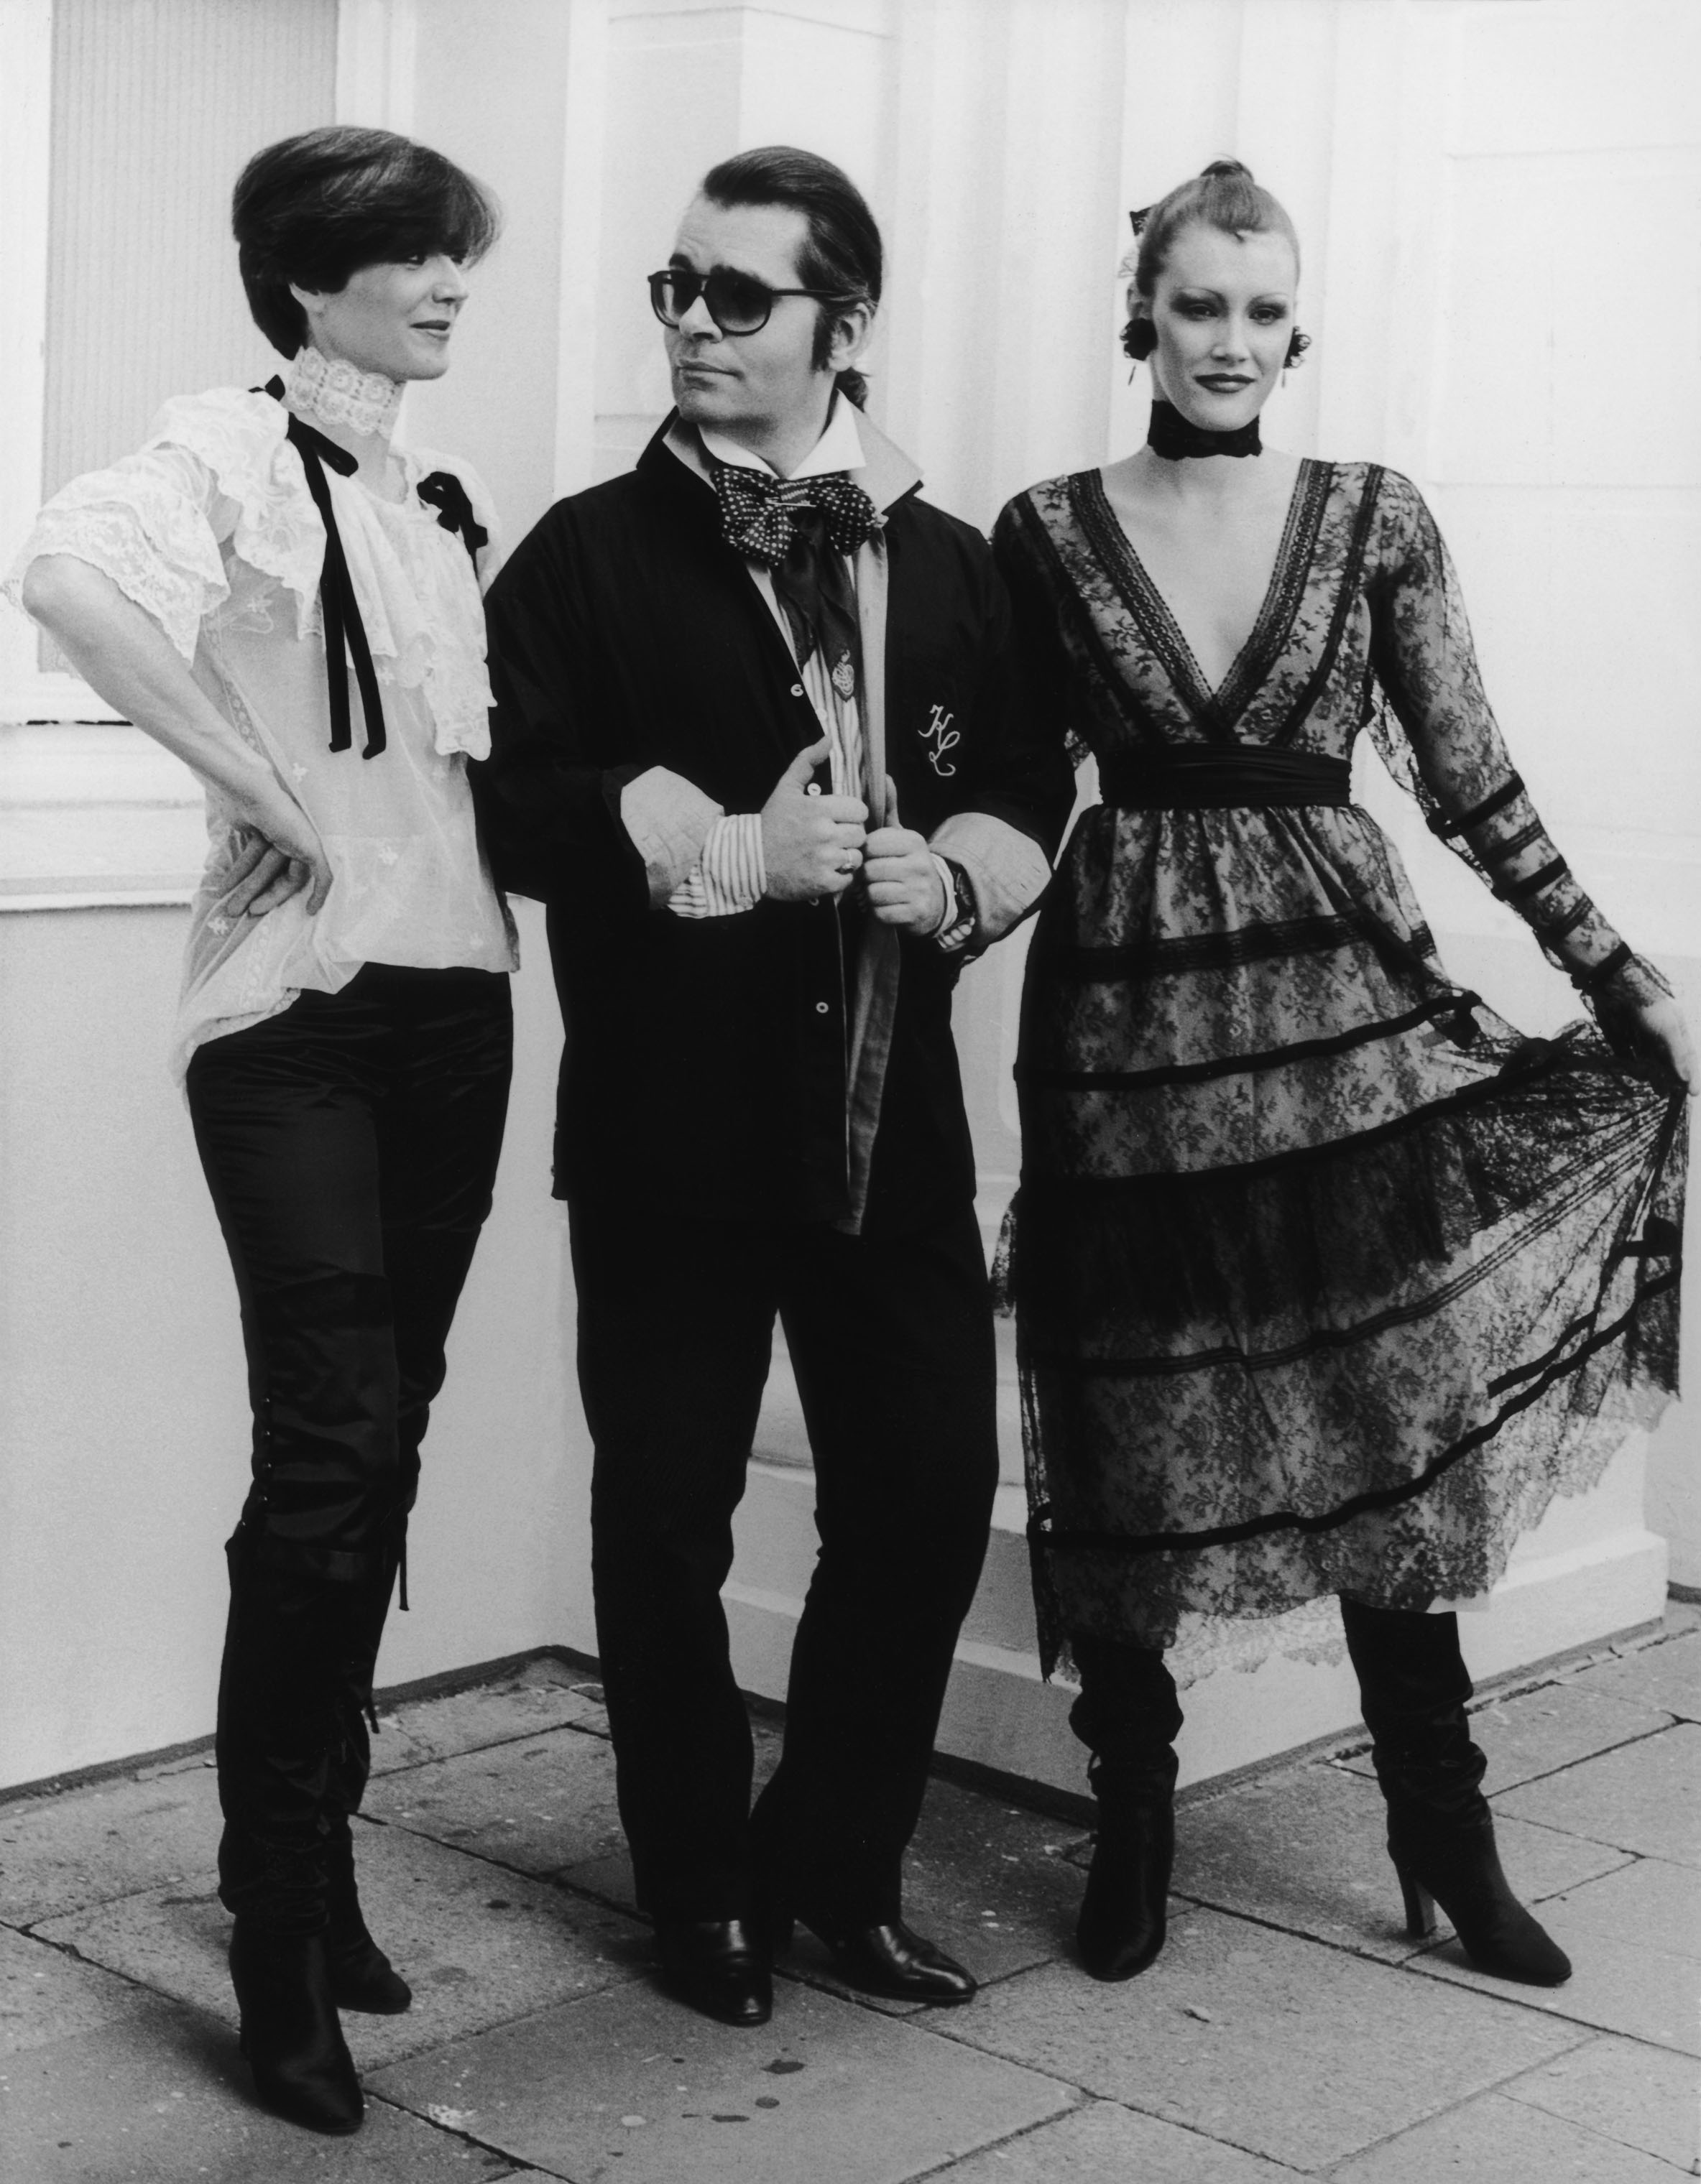 German fashion designer Karl Lagerfeld with two models, circa 1984. (Keystone/Hulton Archive/Getty Images)